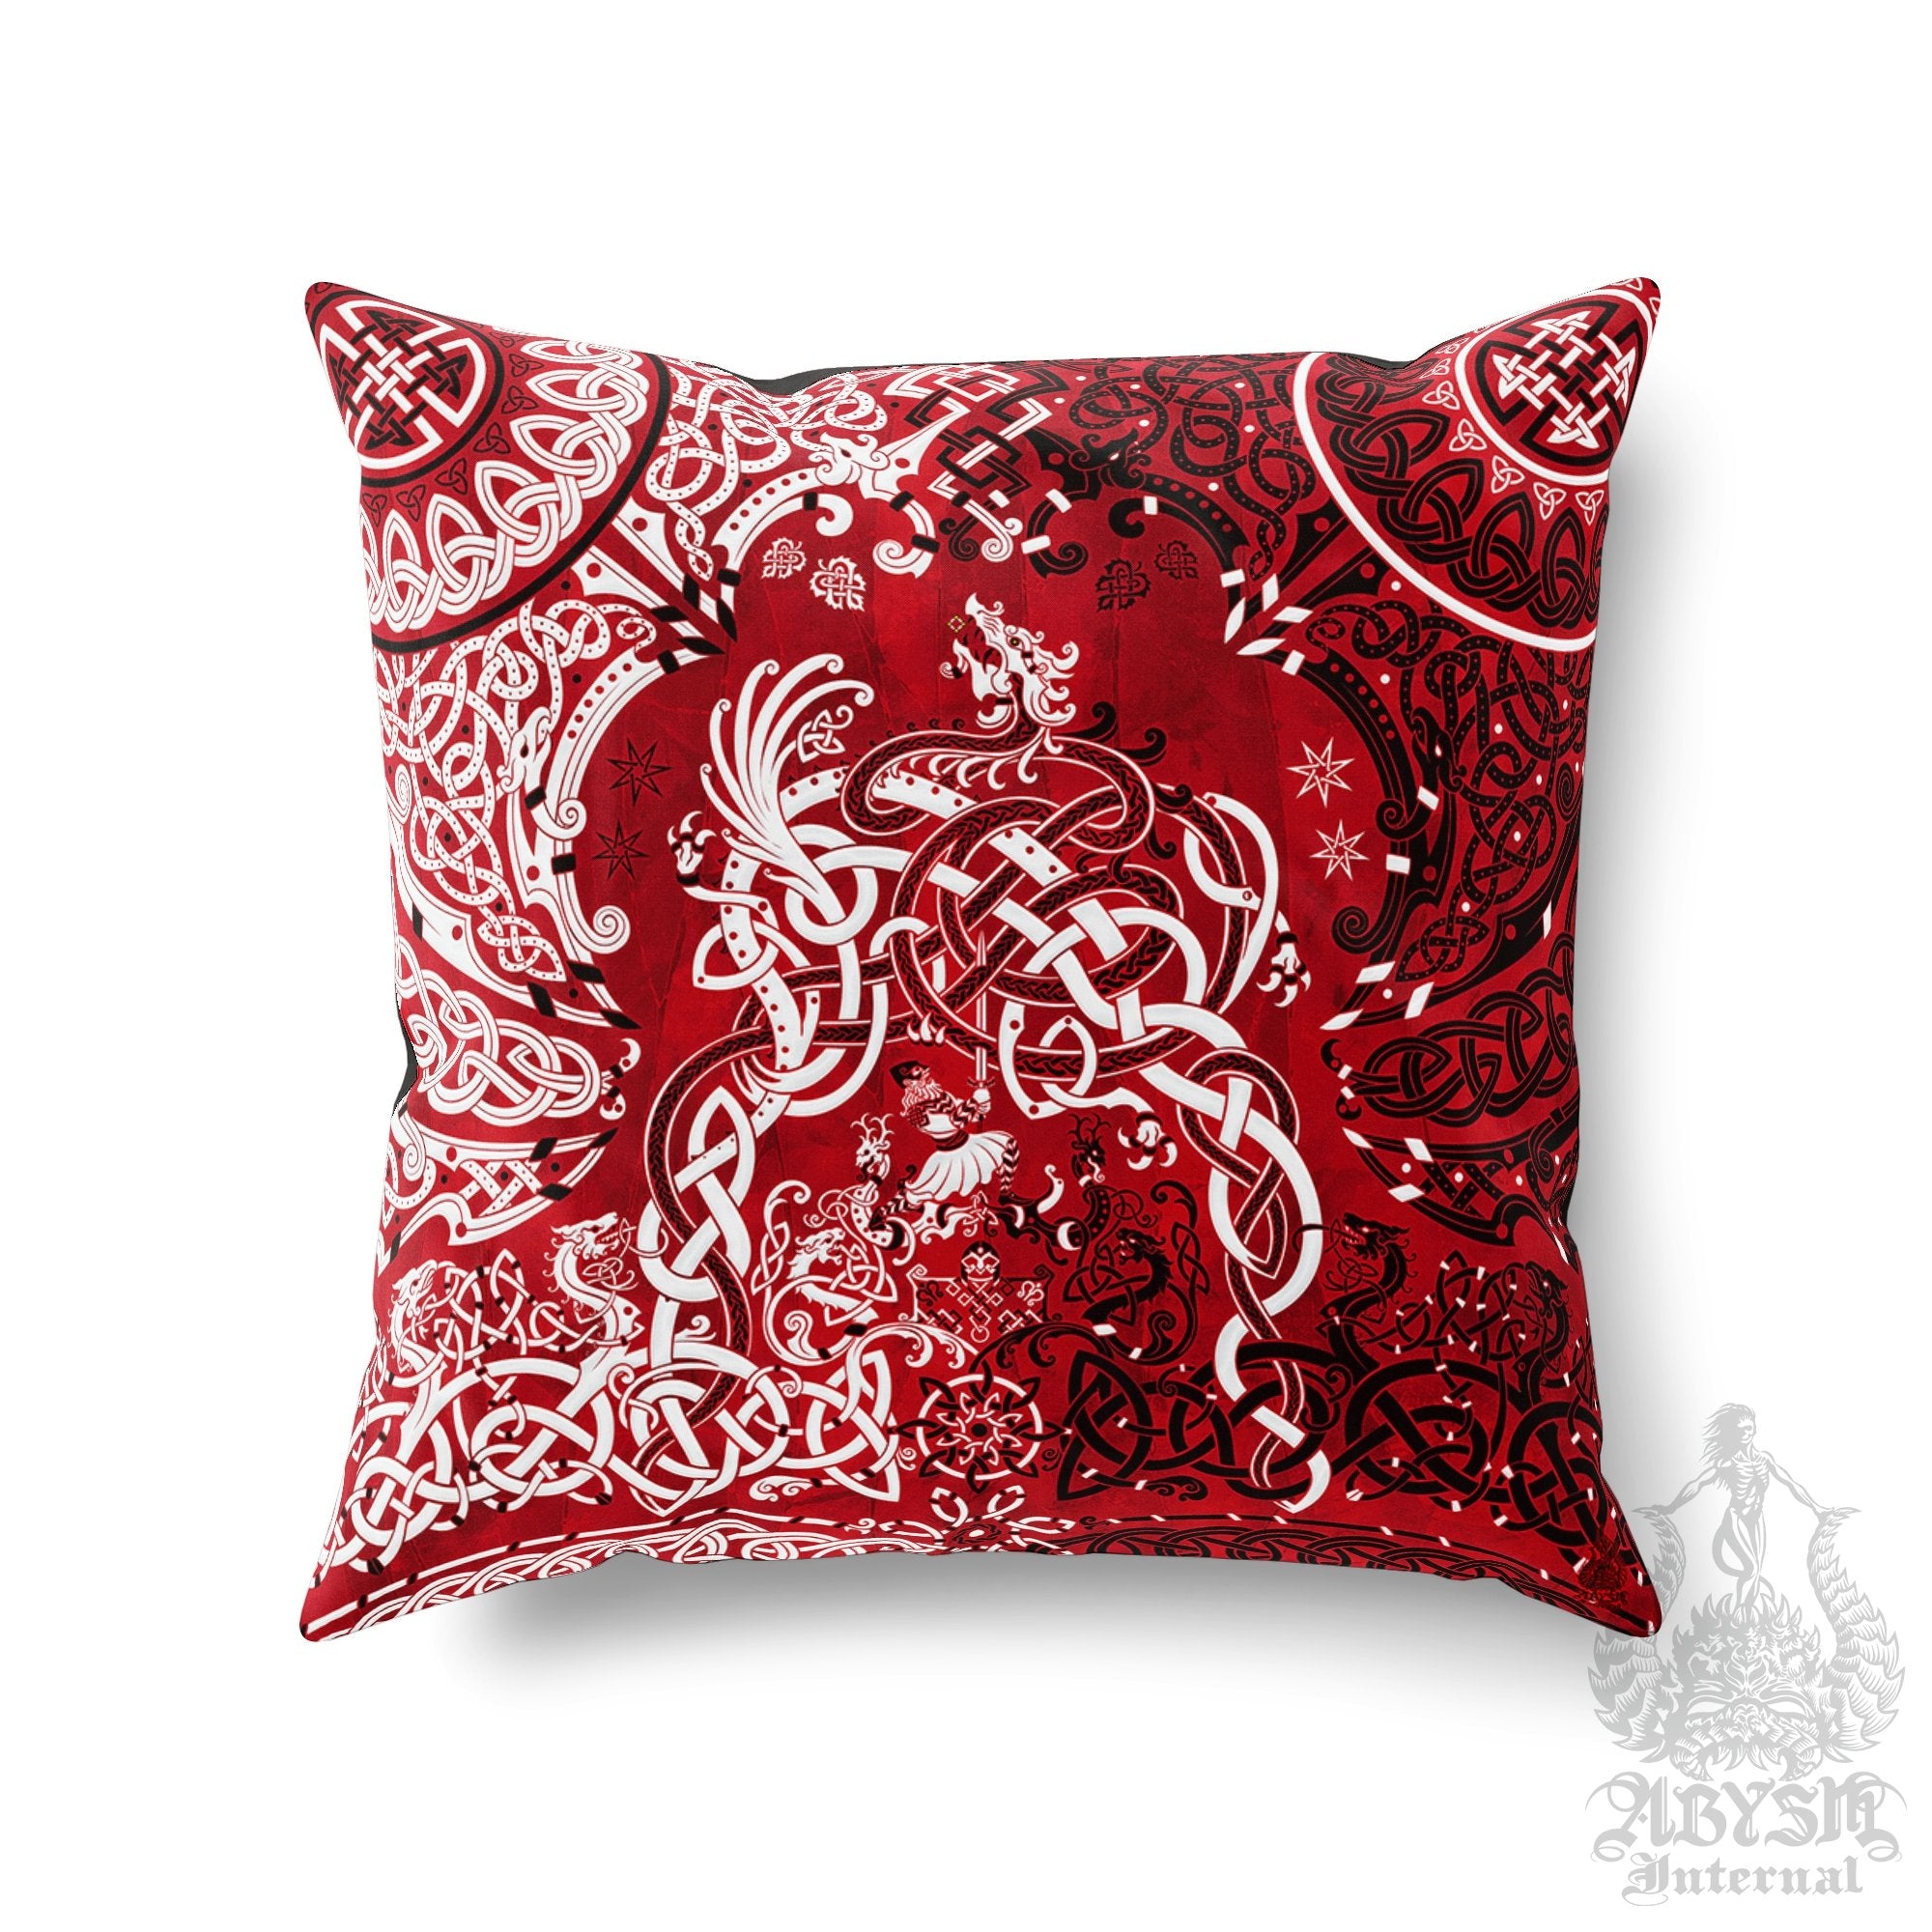 Viking Throw Pillow, Decorative Accent Cushion, Gamer Room Decor, Dragon Fafnir, Nordic Art, Alternative Home - Bloody Red Goth - Abysm Internal